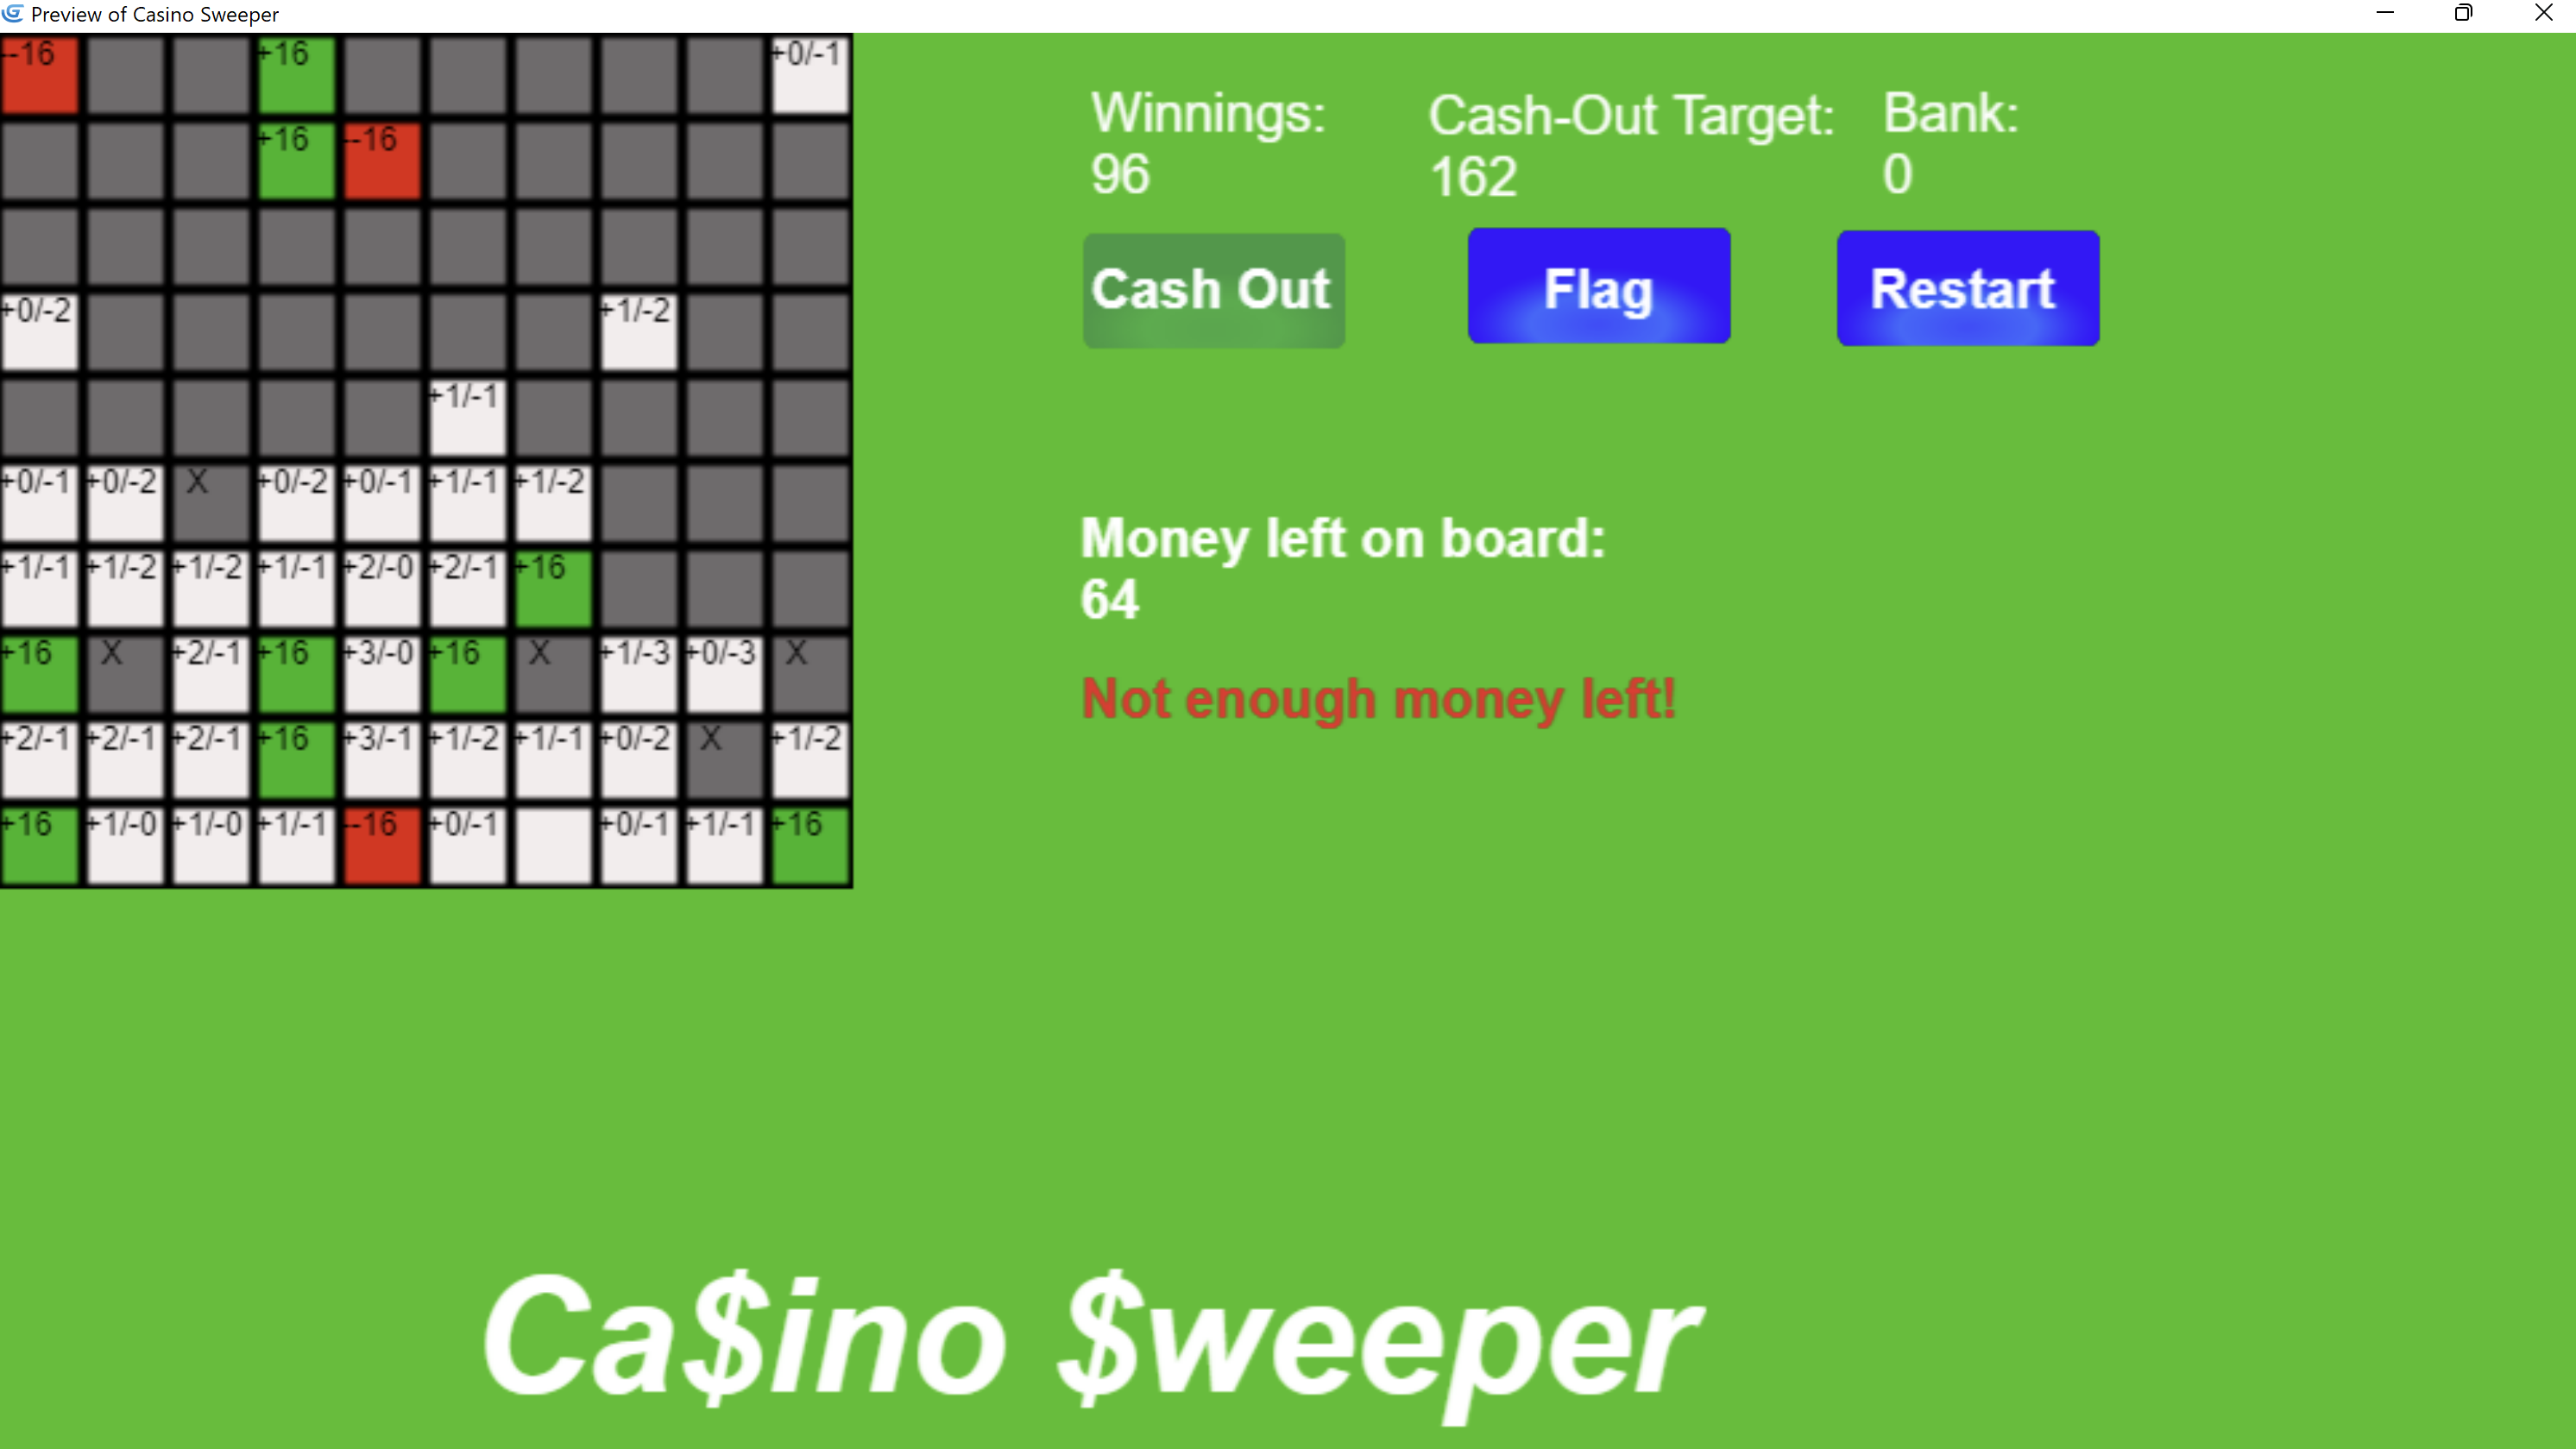 Updated Casino Sweeper